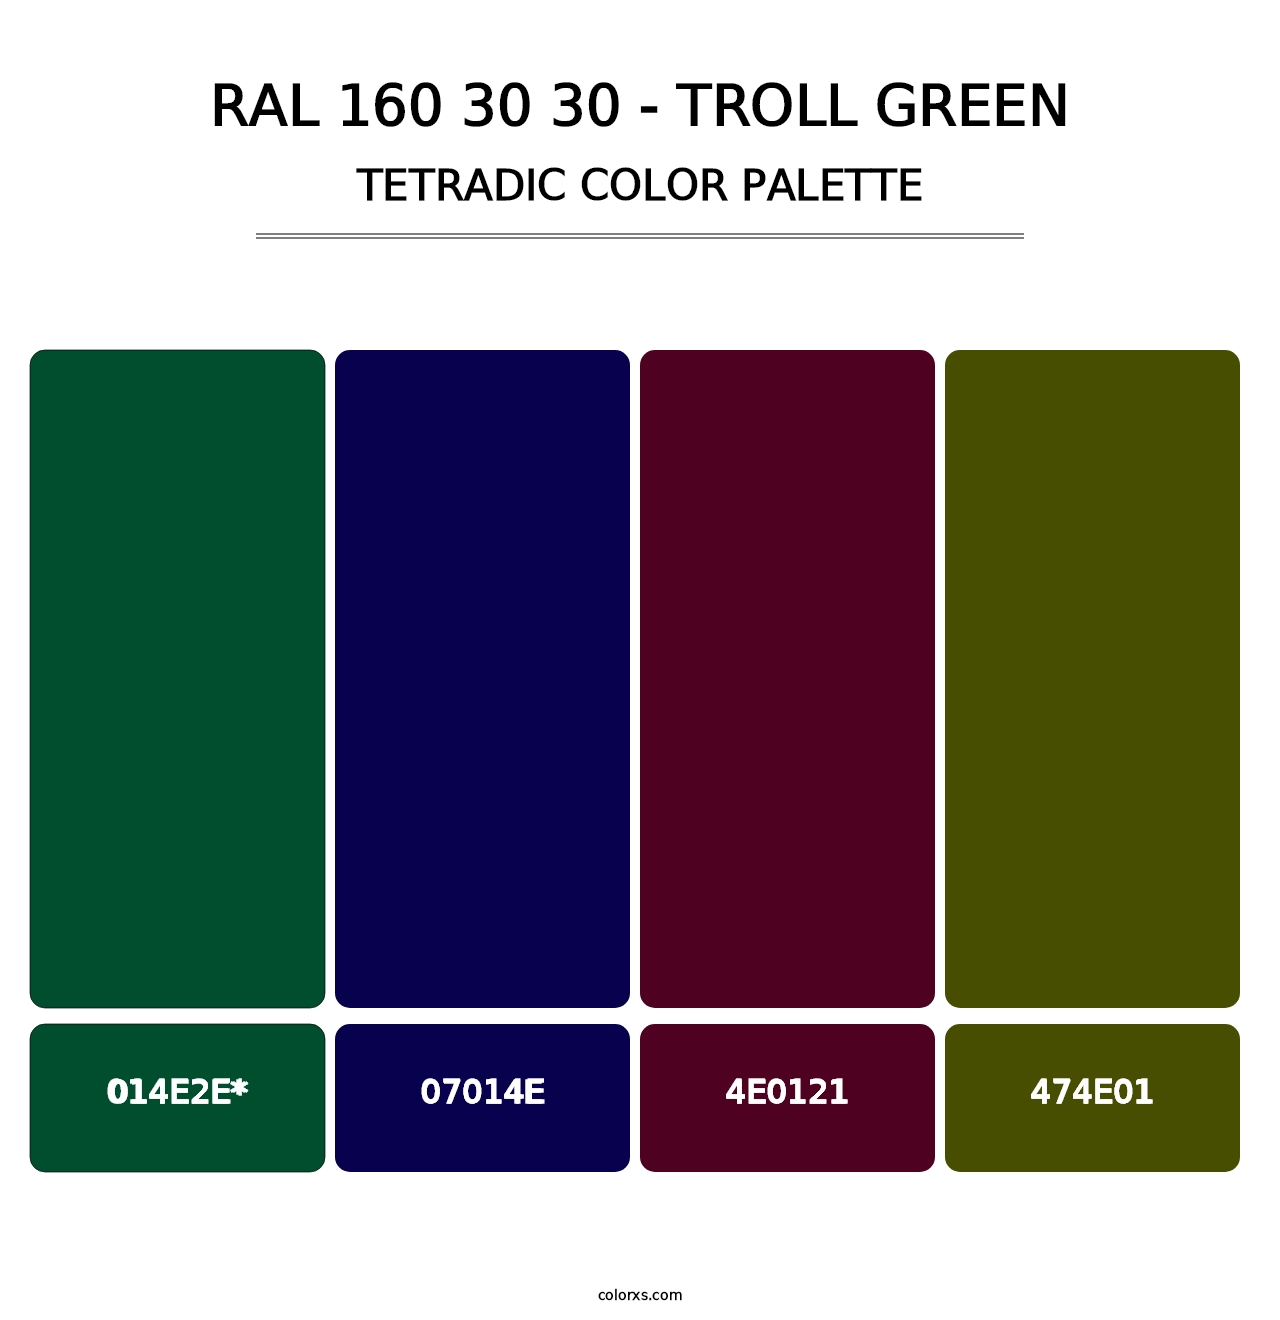 RAL 160 30 30 - Troll Green - Tetradic Color Palette